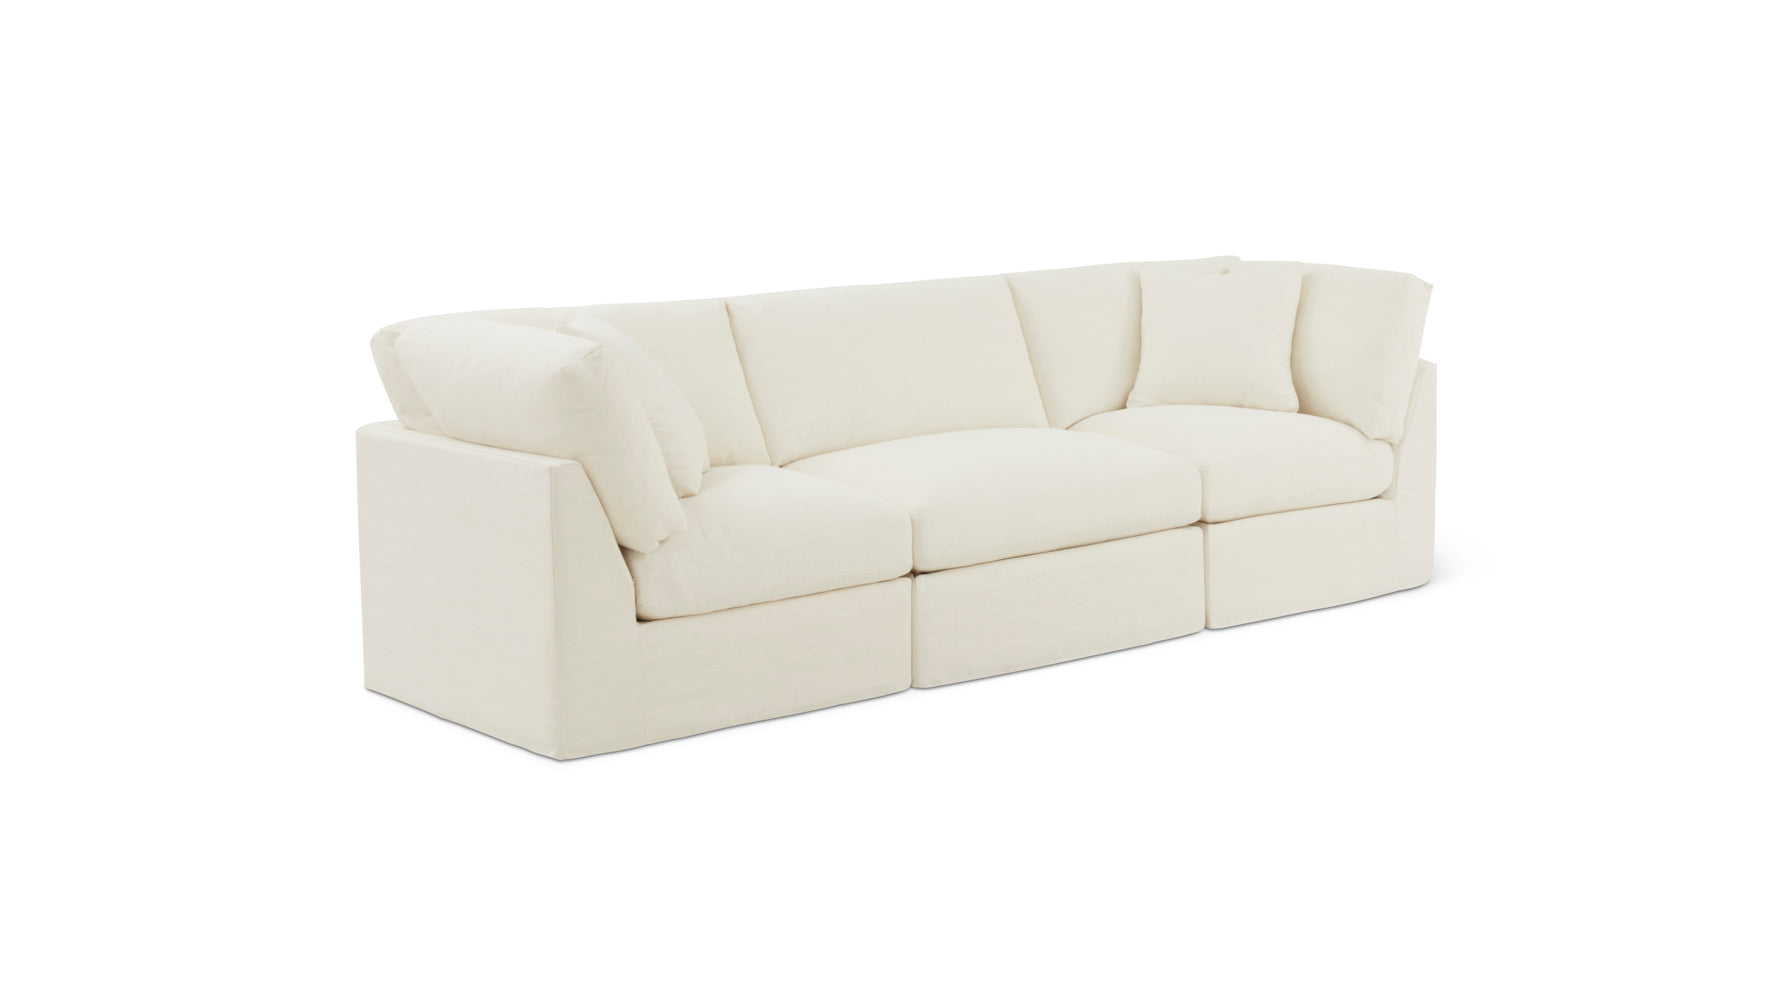 Get Together™ 3-Piece Modular Sofa, Standard, Cream Linen - Image 2